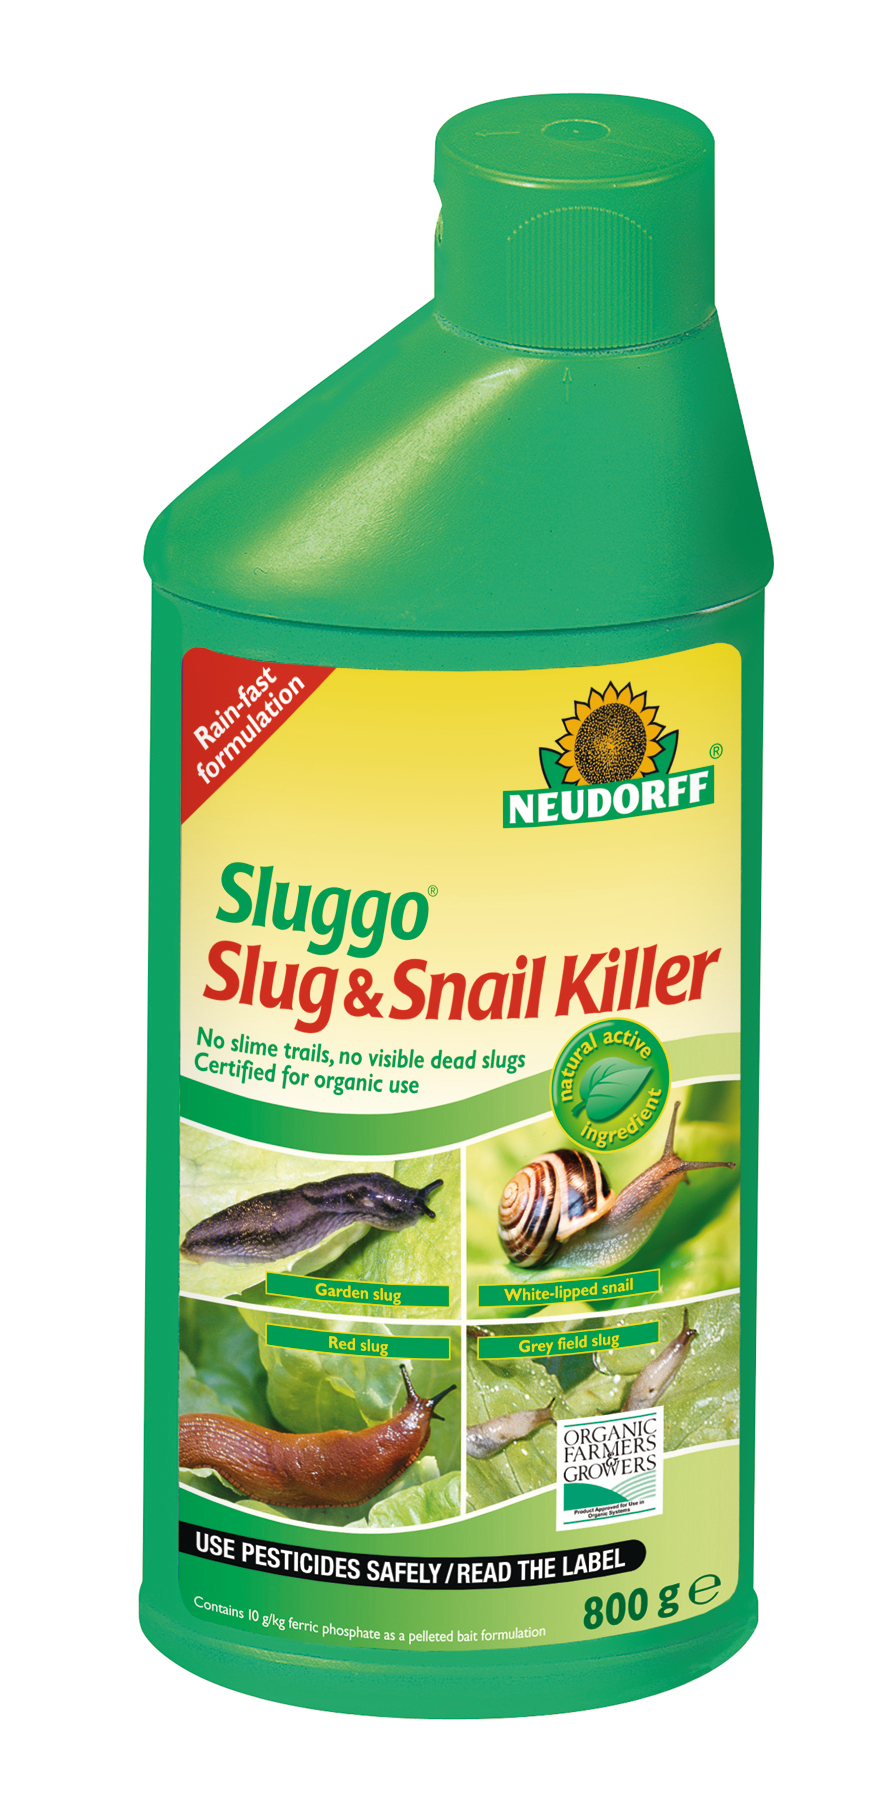 Neudorff SLUGGO Slug and Snail Killer - 800 g